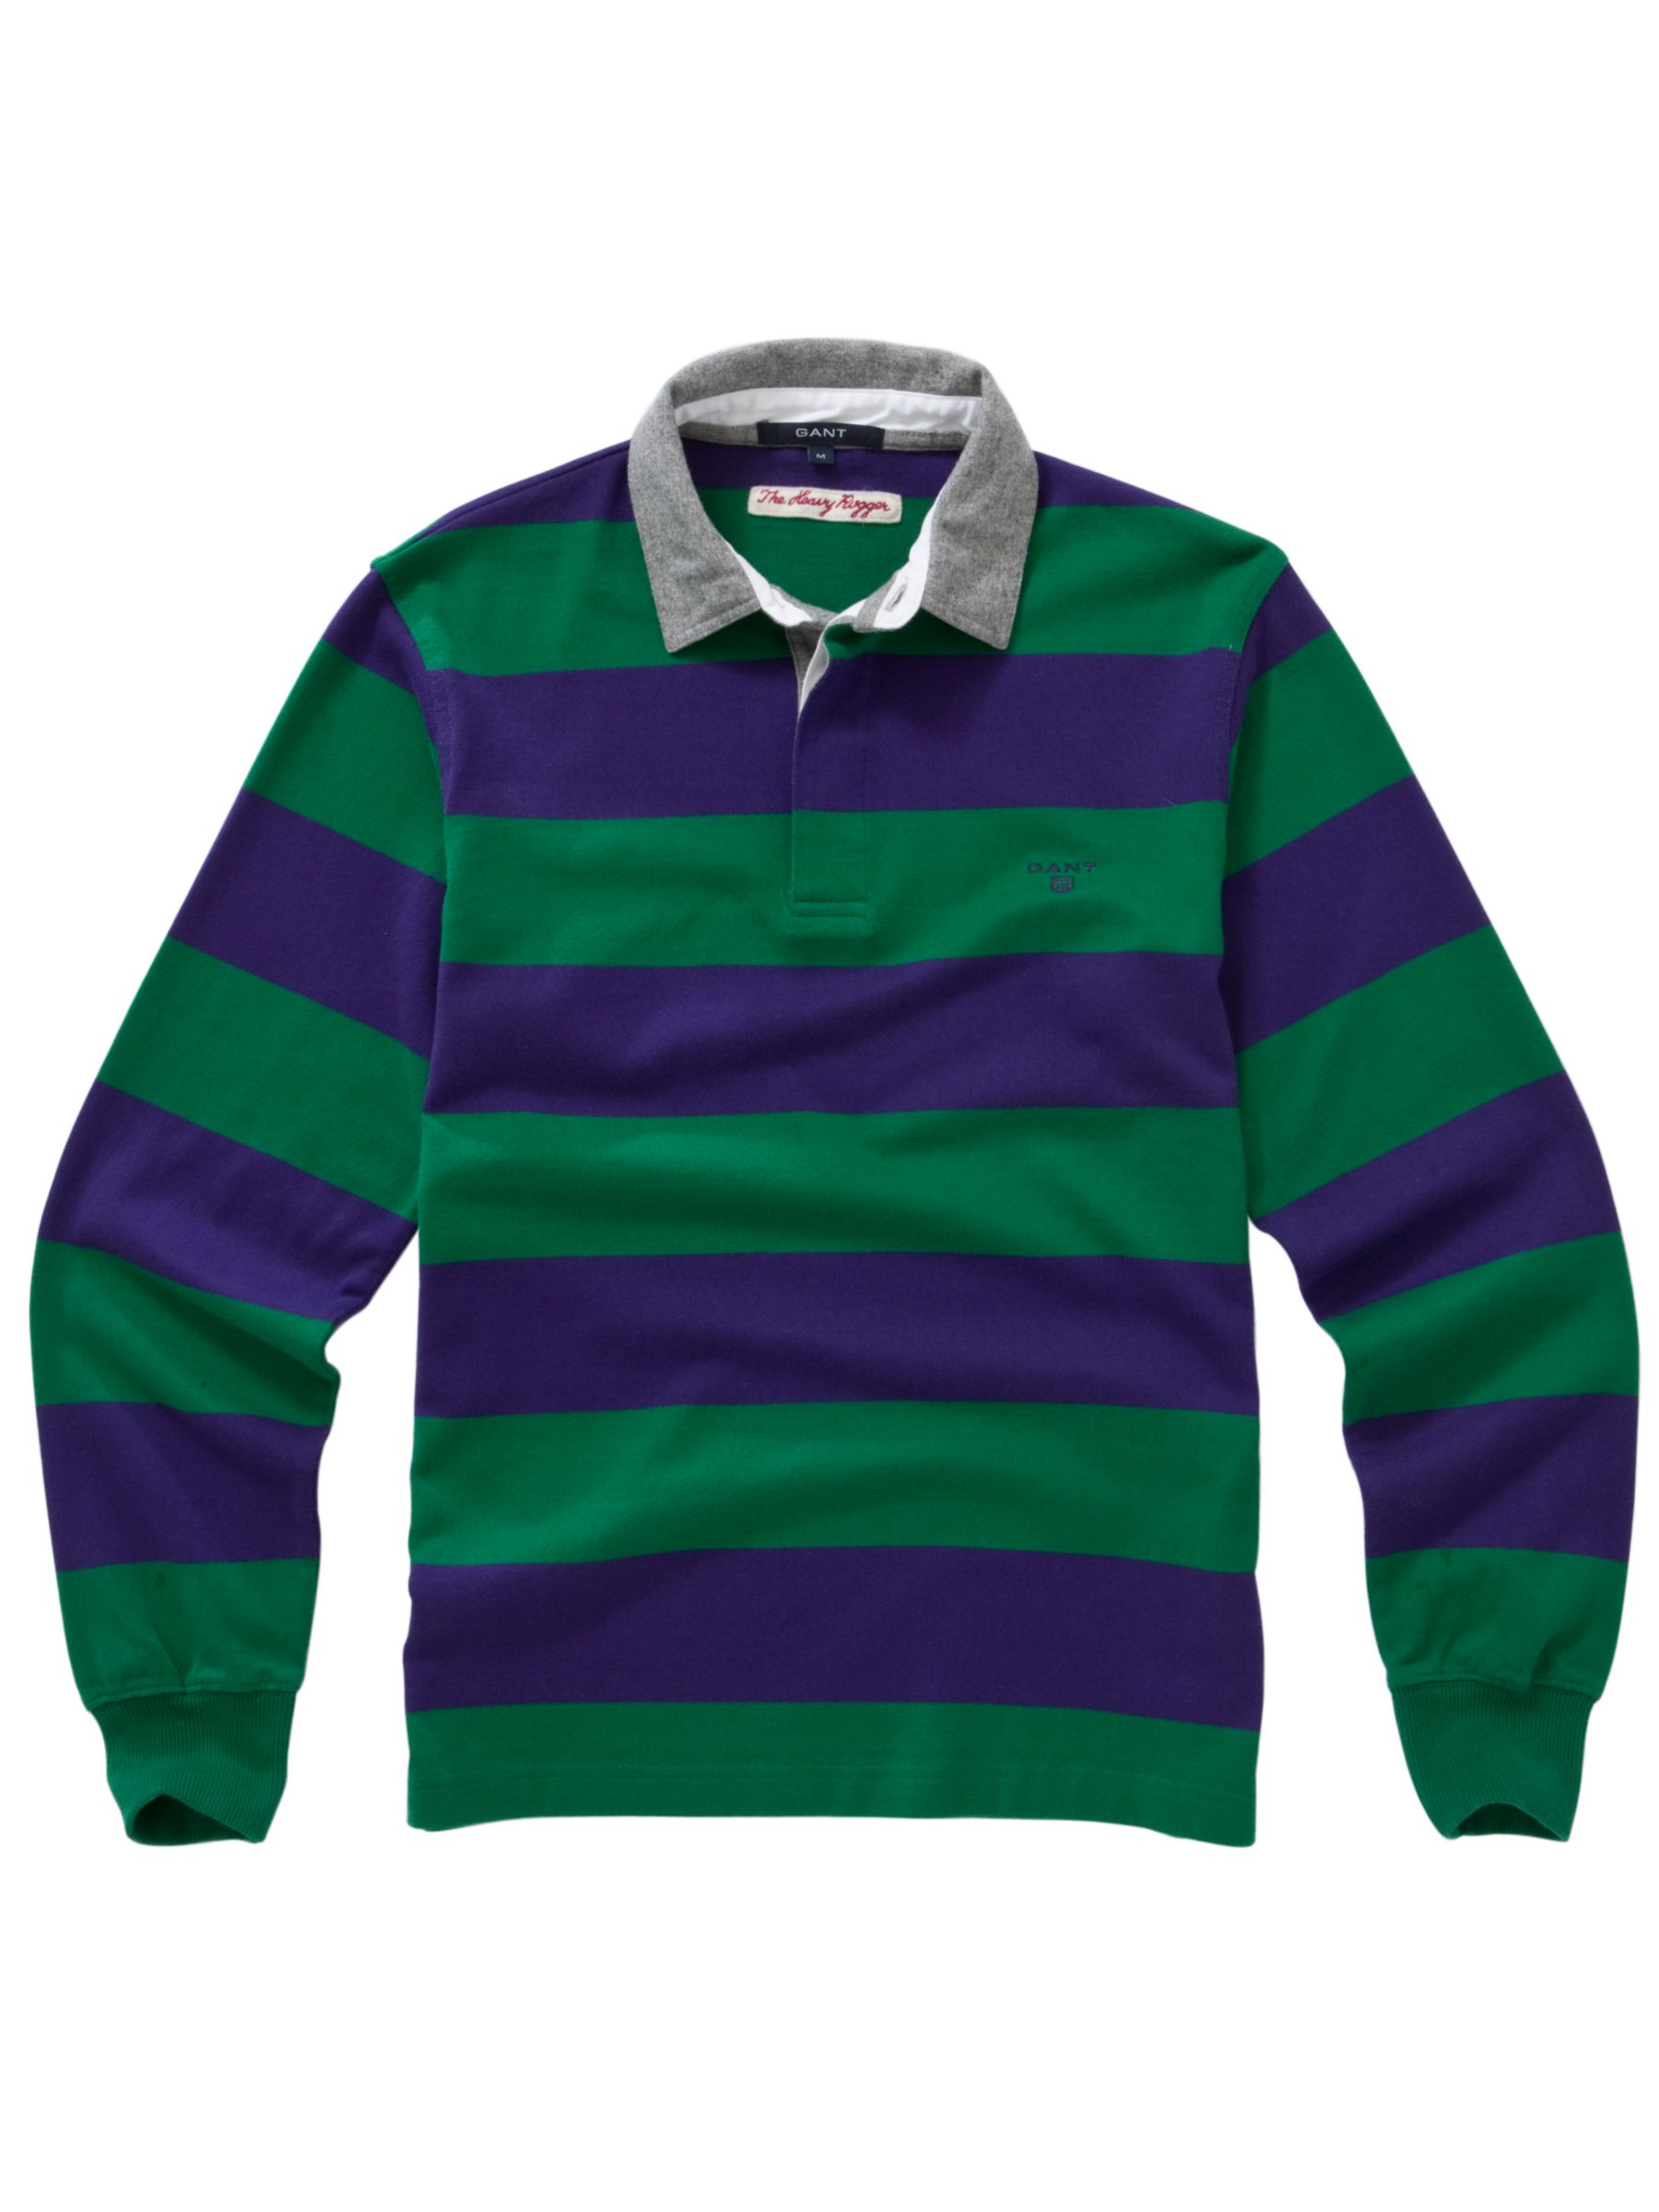 Gant Wild Bar Stripe Rugby Shirt, Basil green